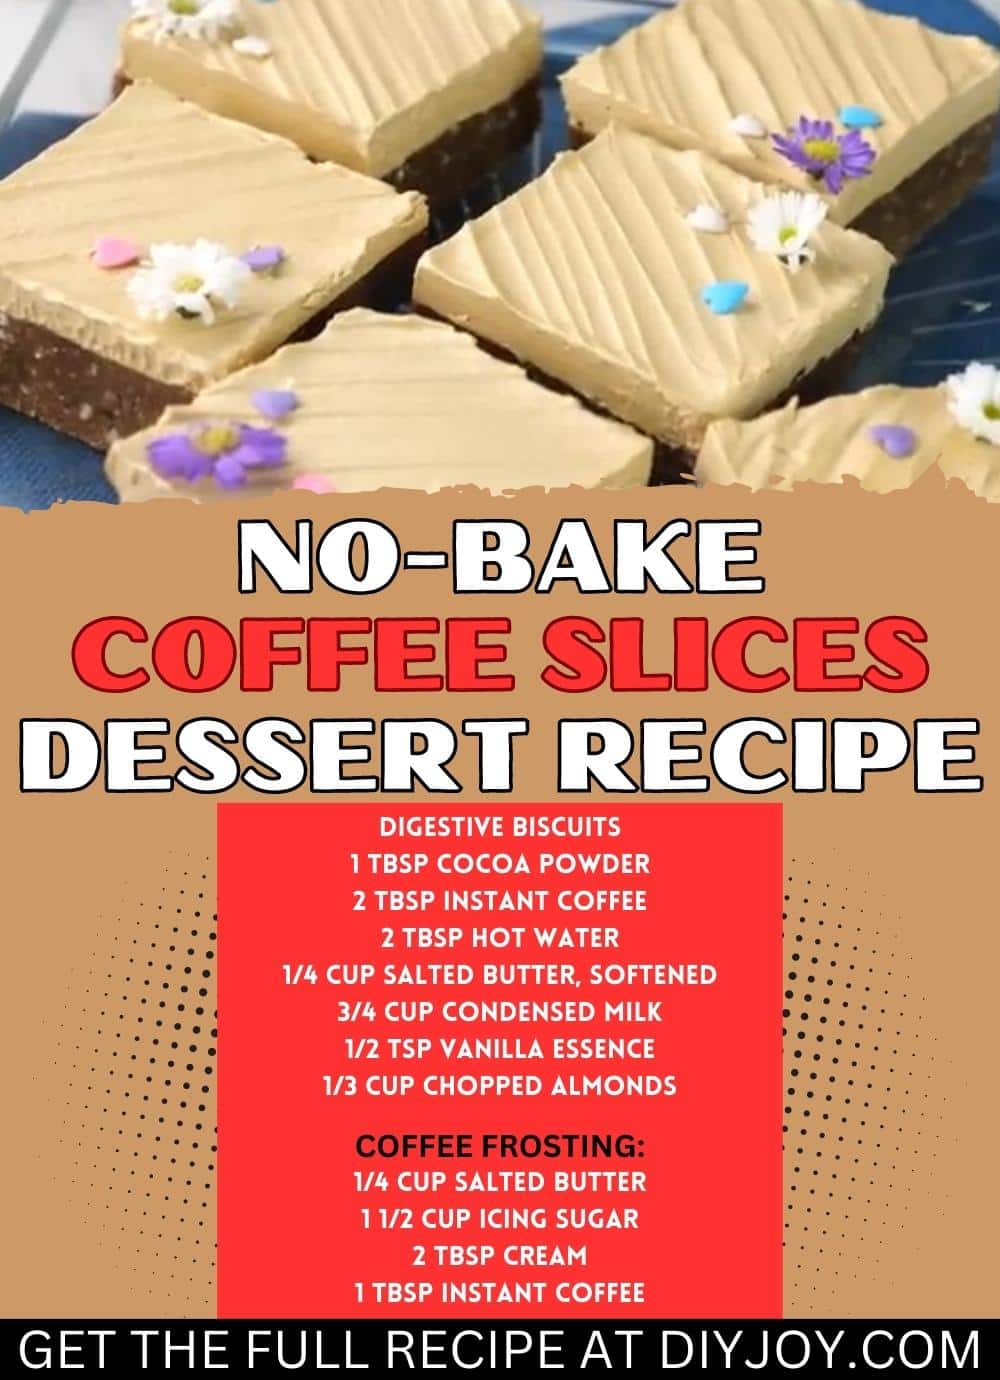 No-Bake Coffee Slices Dessert Recipe